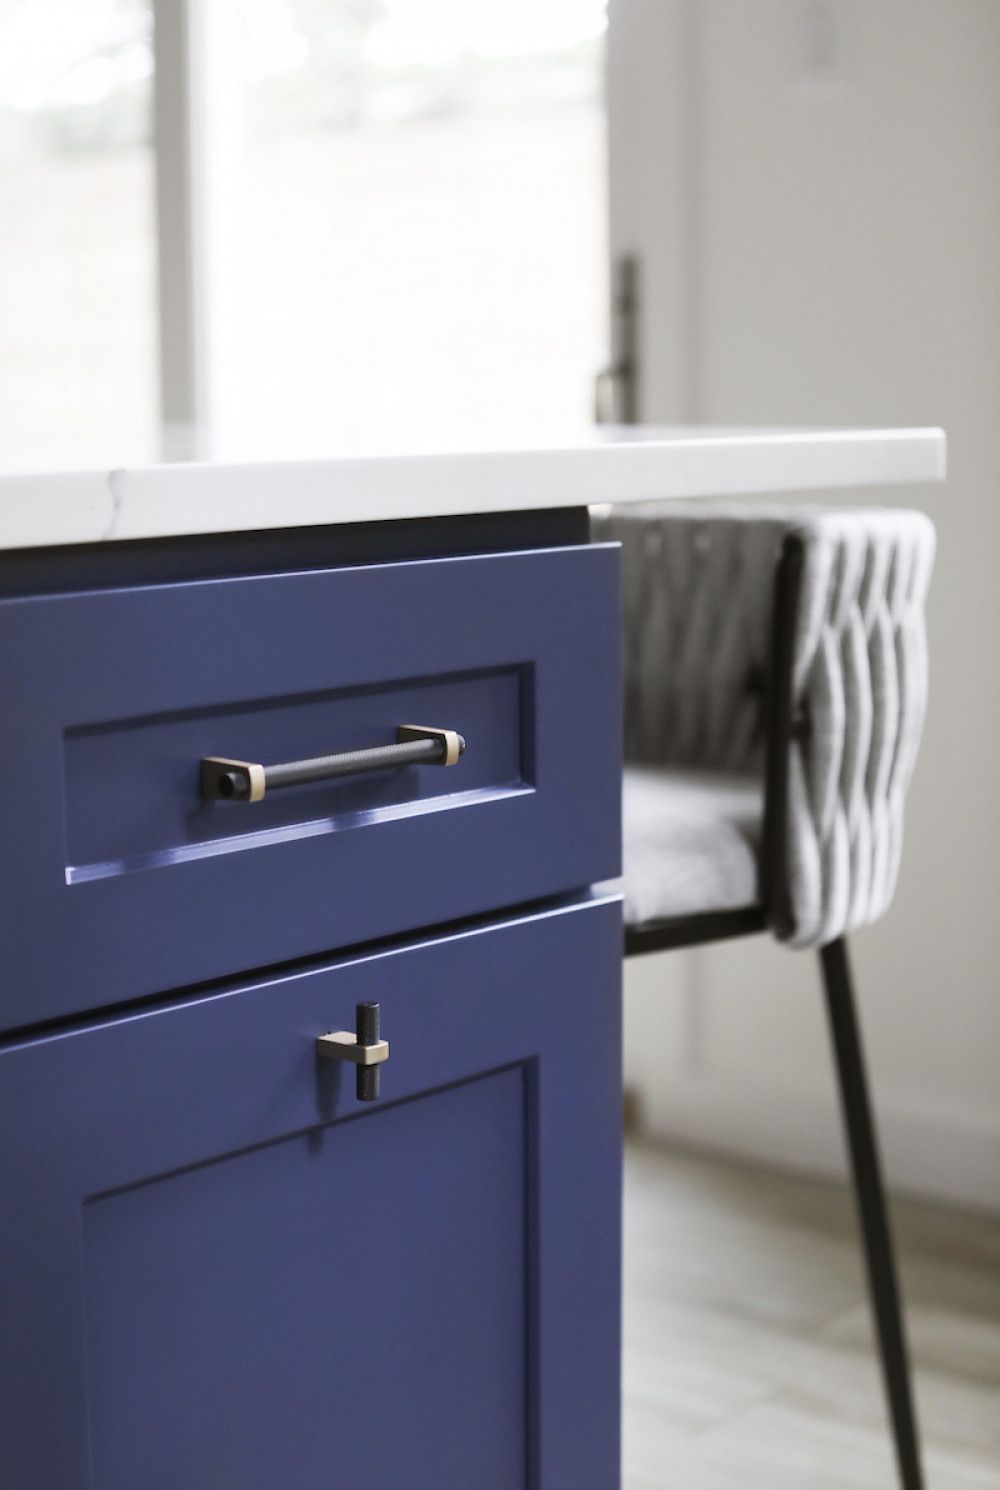 kitchen-cabinet-details-blue